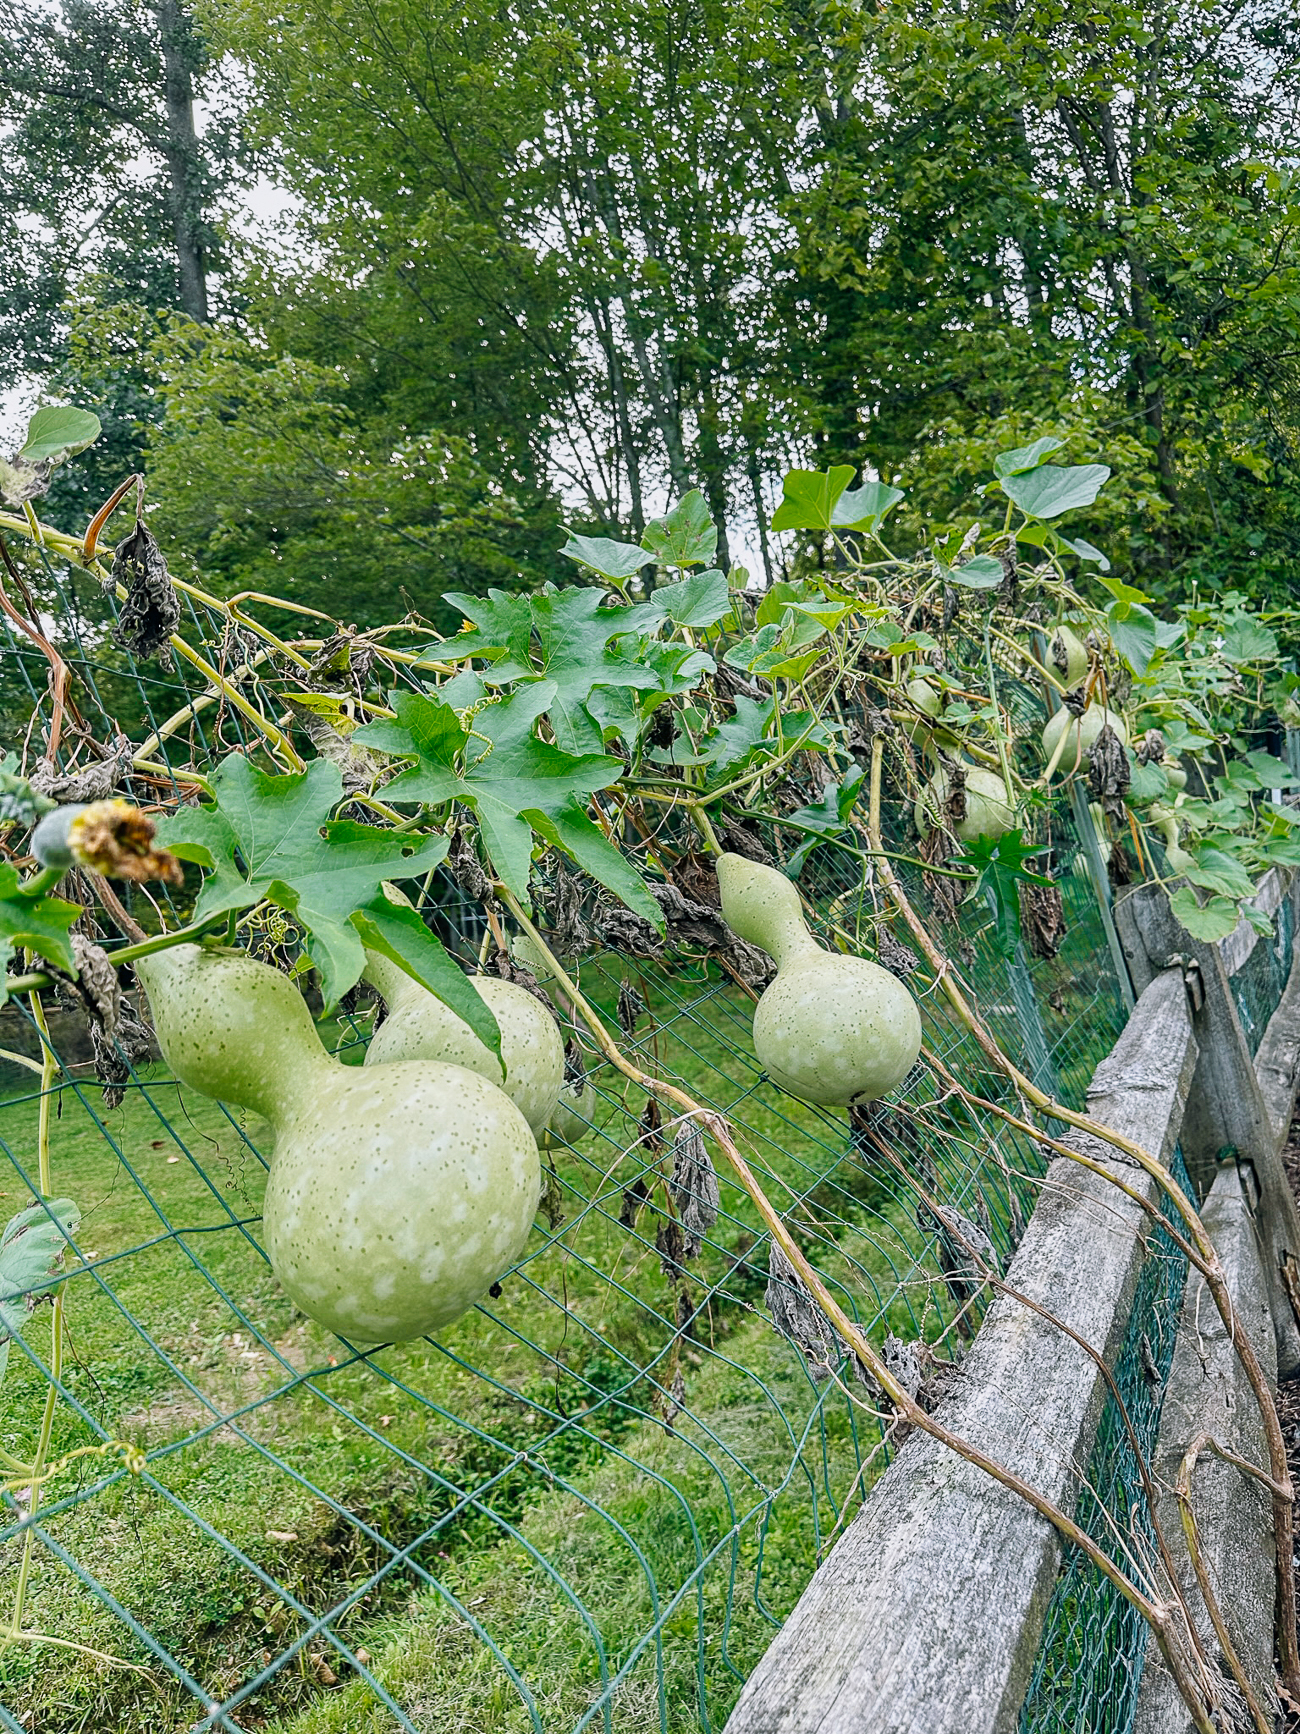 birdhouse gourd growing